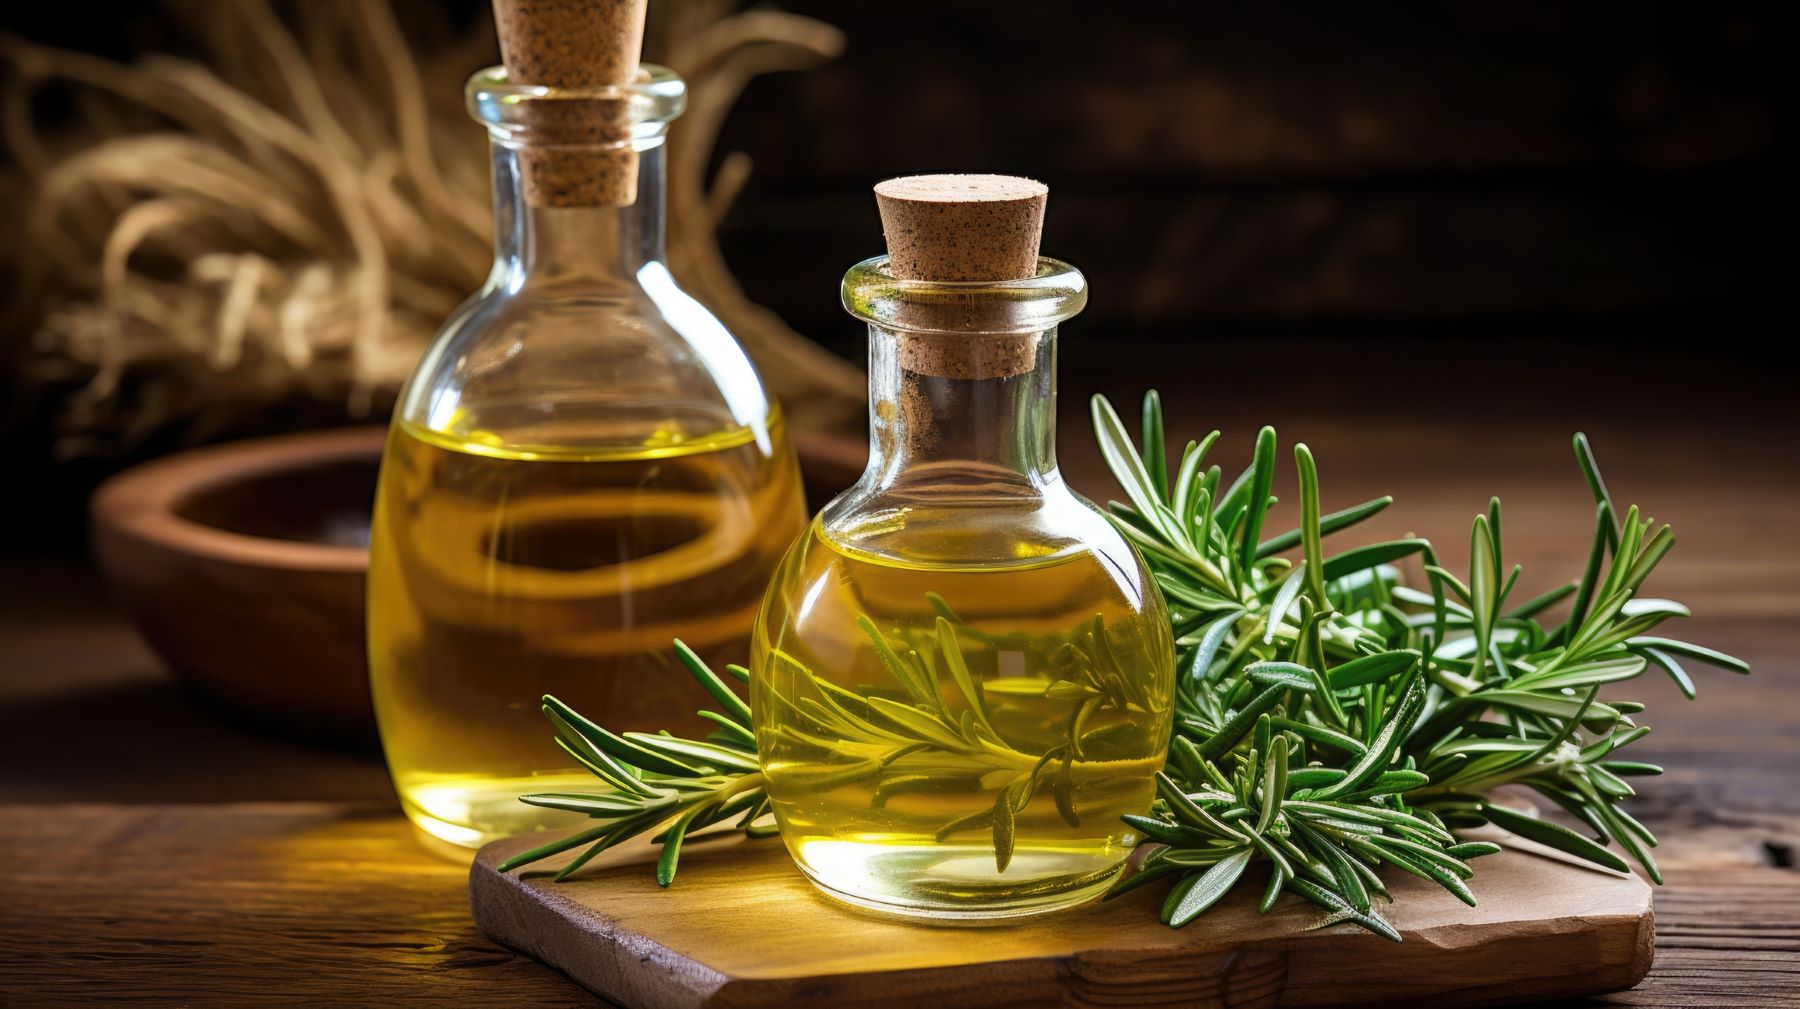 Rosemary oil reduces hair loss